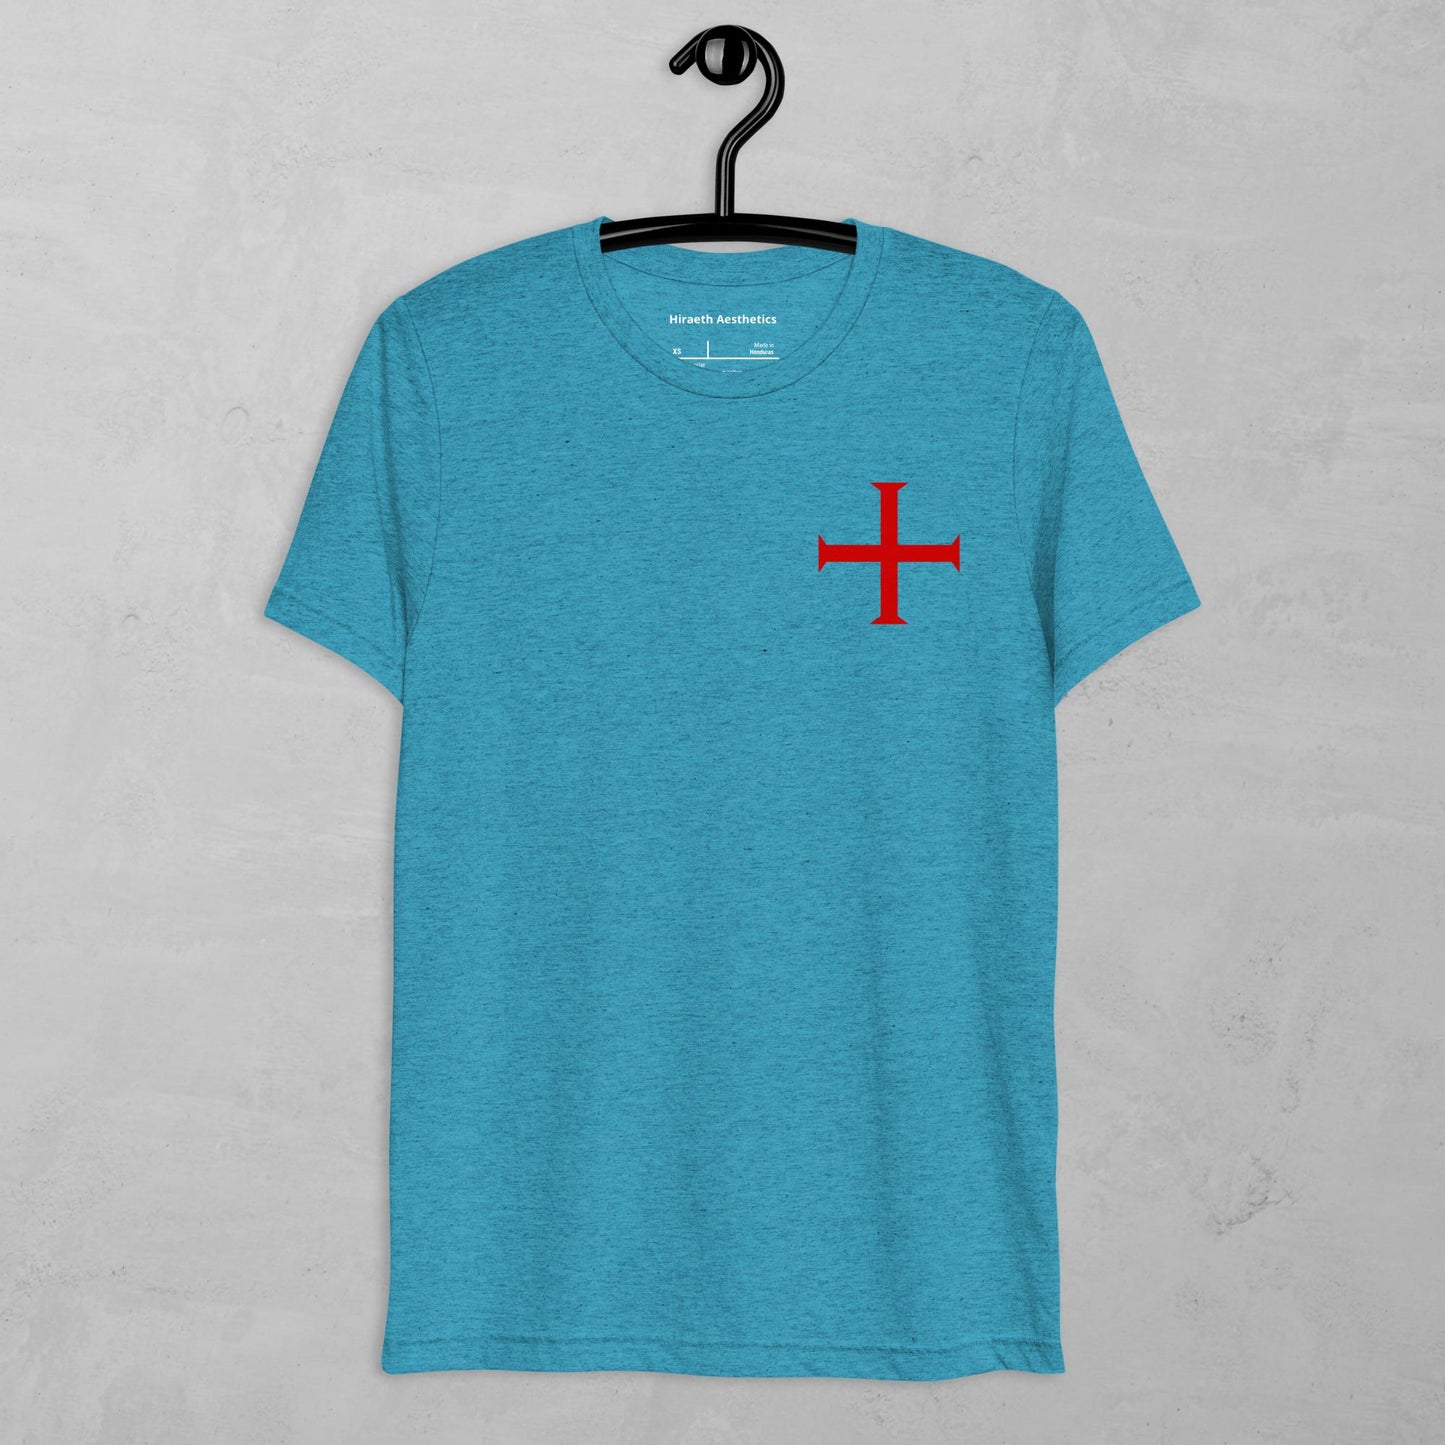 Deus Vult Crusader t-shirt